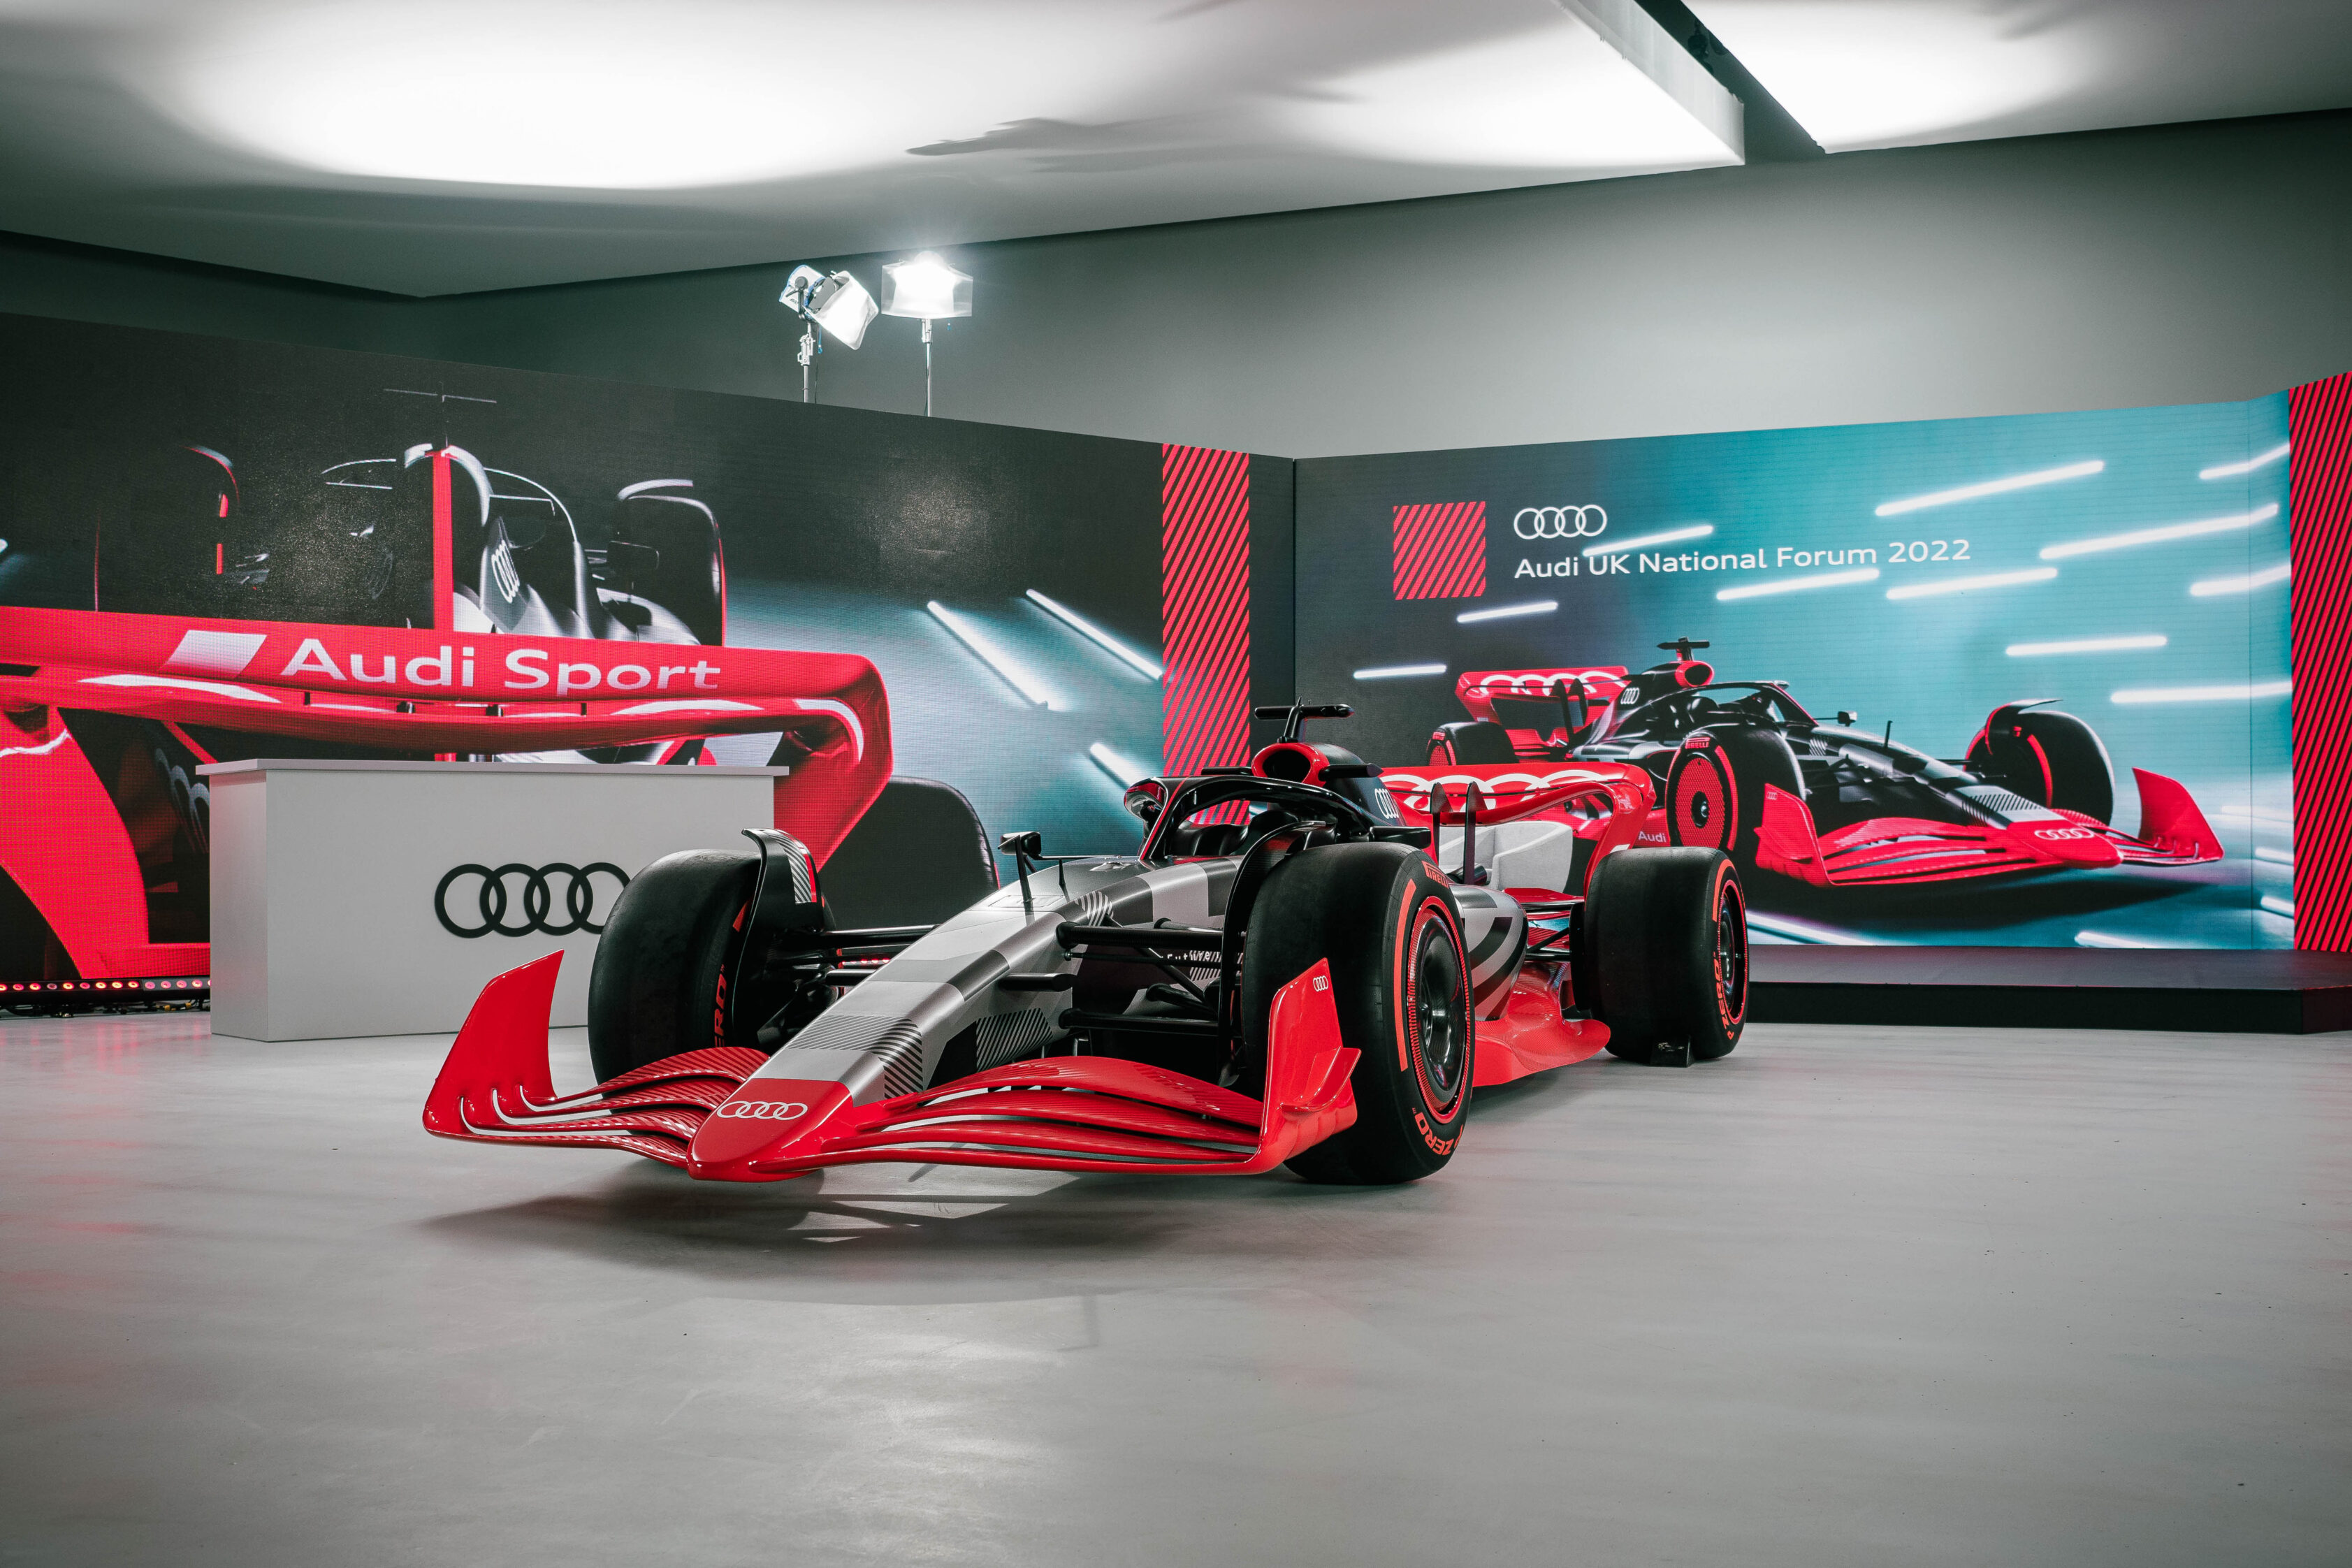 Audi UK National Forum featuring the Audi F1 Car